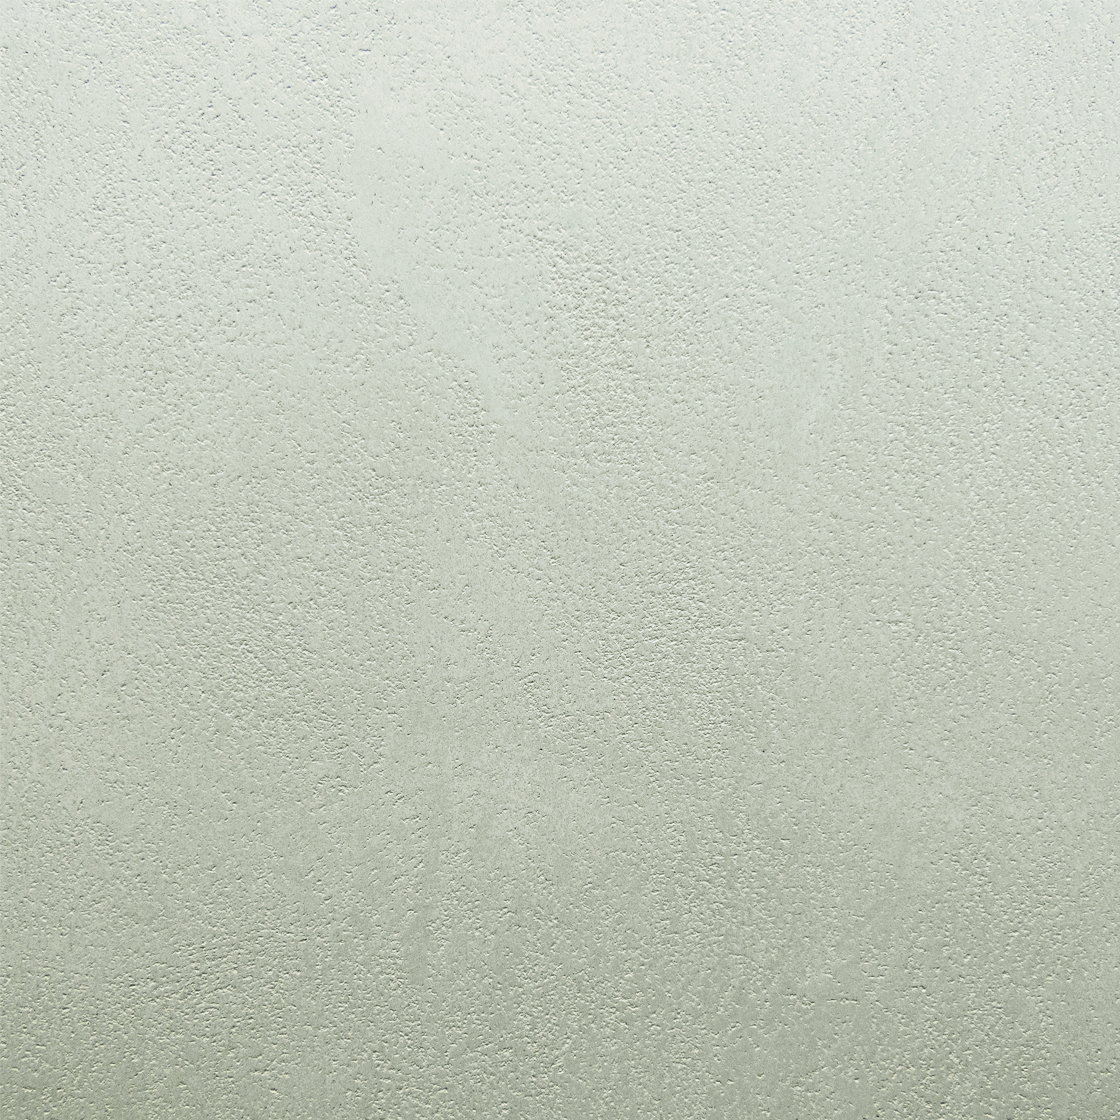 Close up of Armourcoat leatherstone exterior polished plaster finish - 73